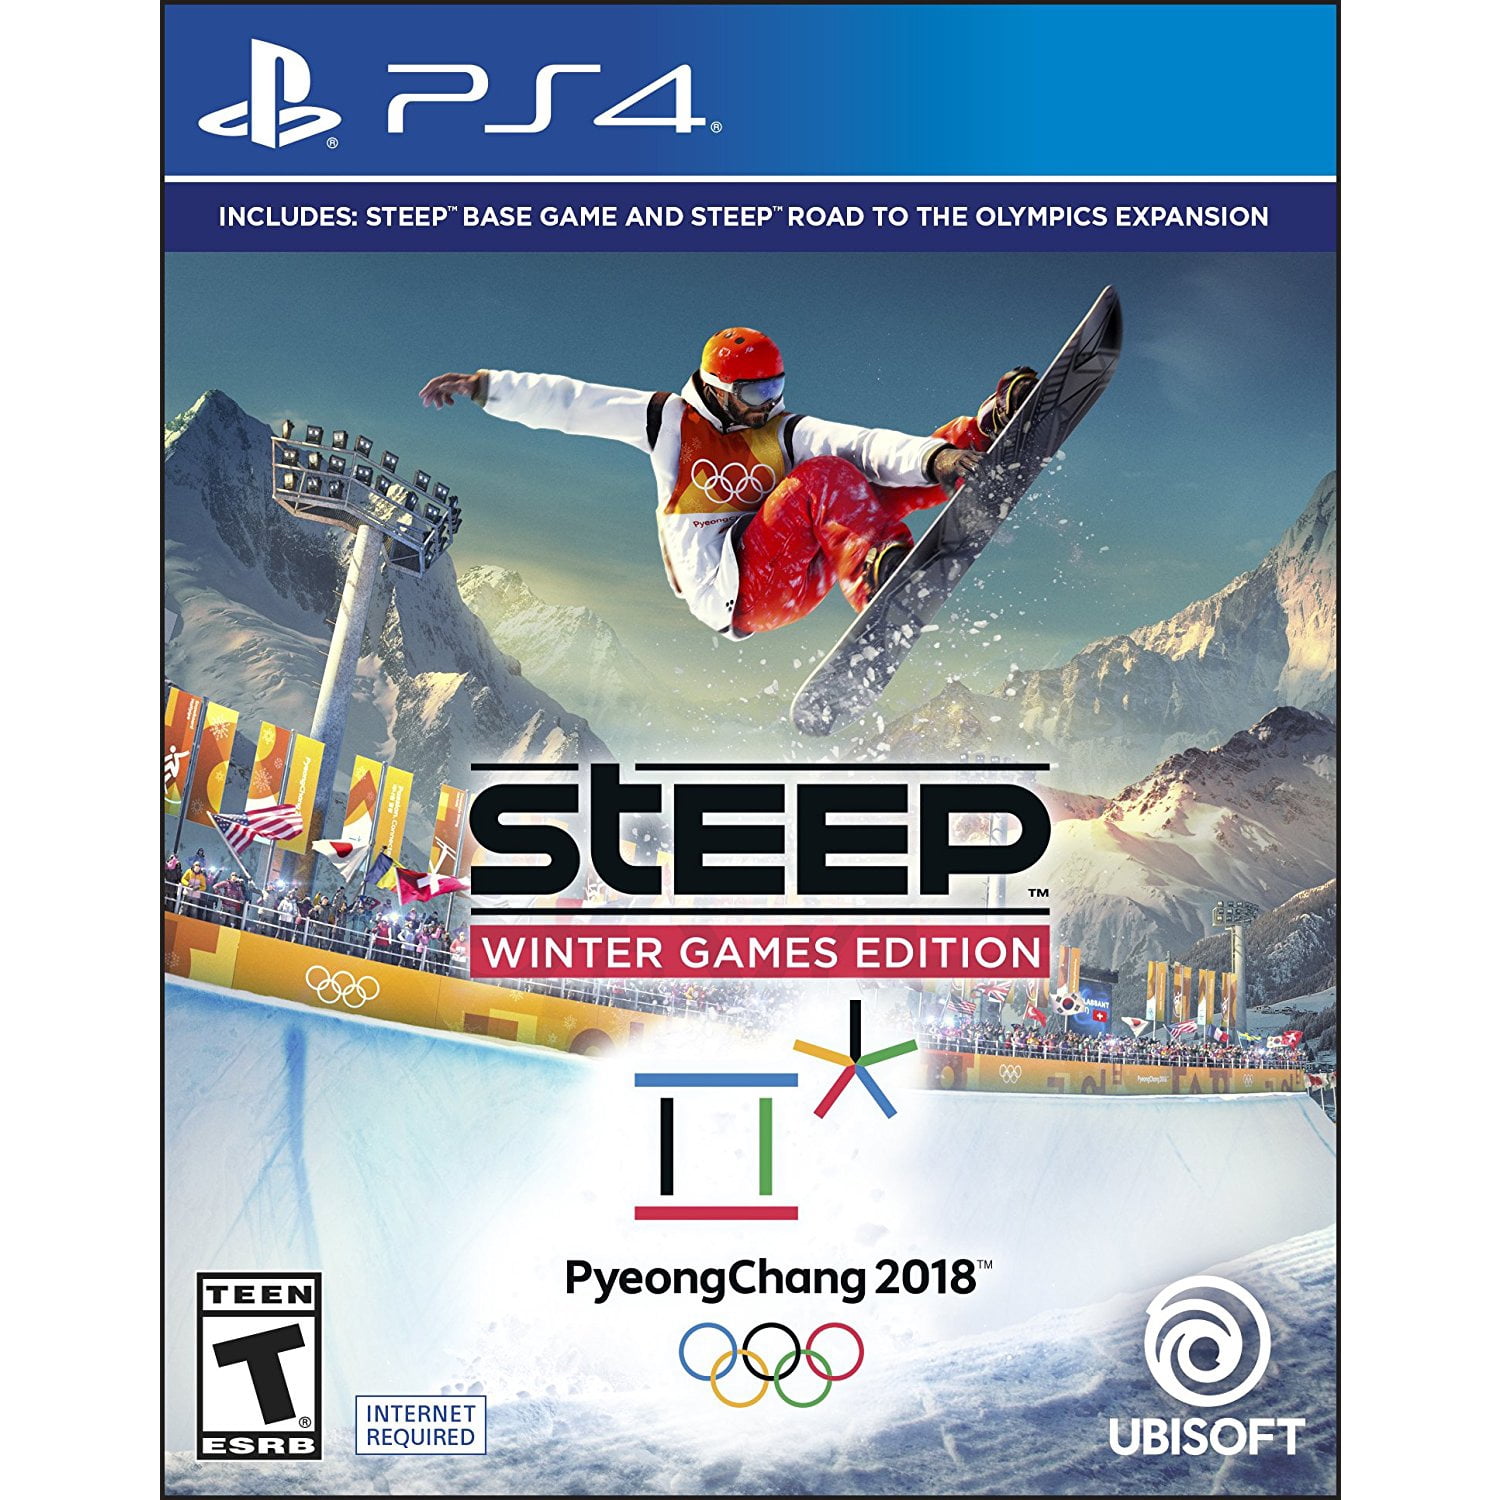 Steep Winter Games Edition, Ubisoft, 4, 887256033033 - Walmart.com